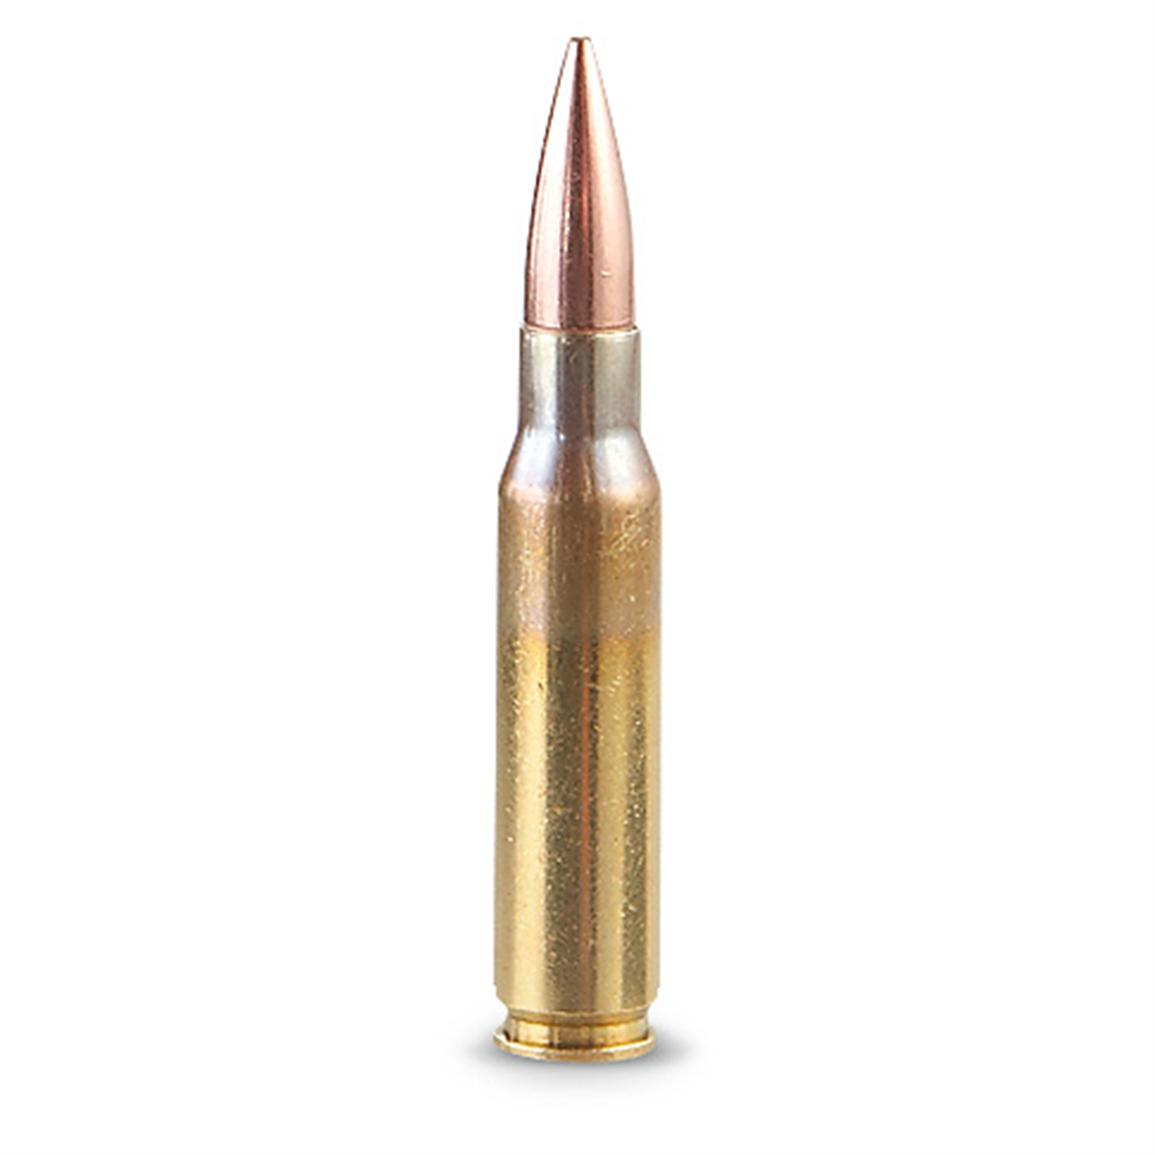 ppu-308-fmj-bt-145-grain-200-rounds-227303-308-winchester-ammo